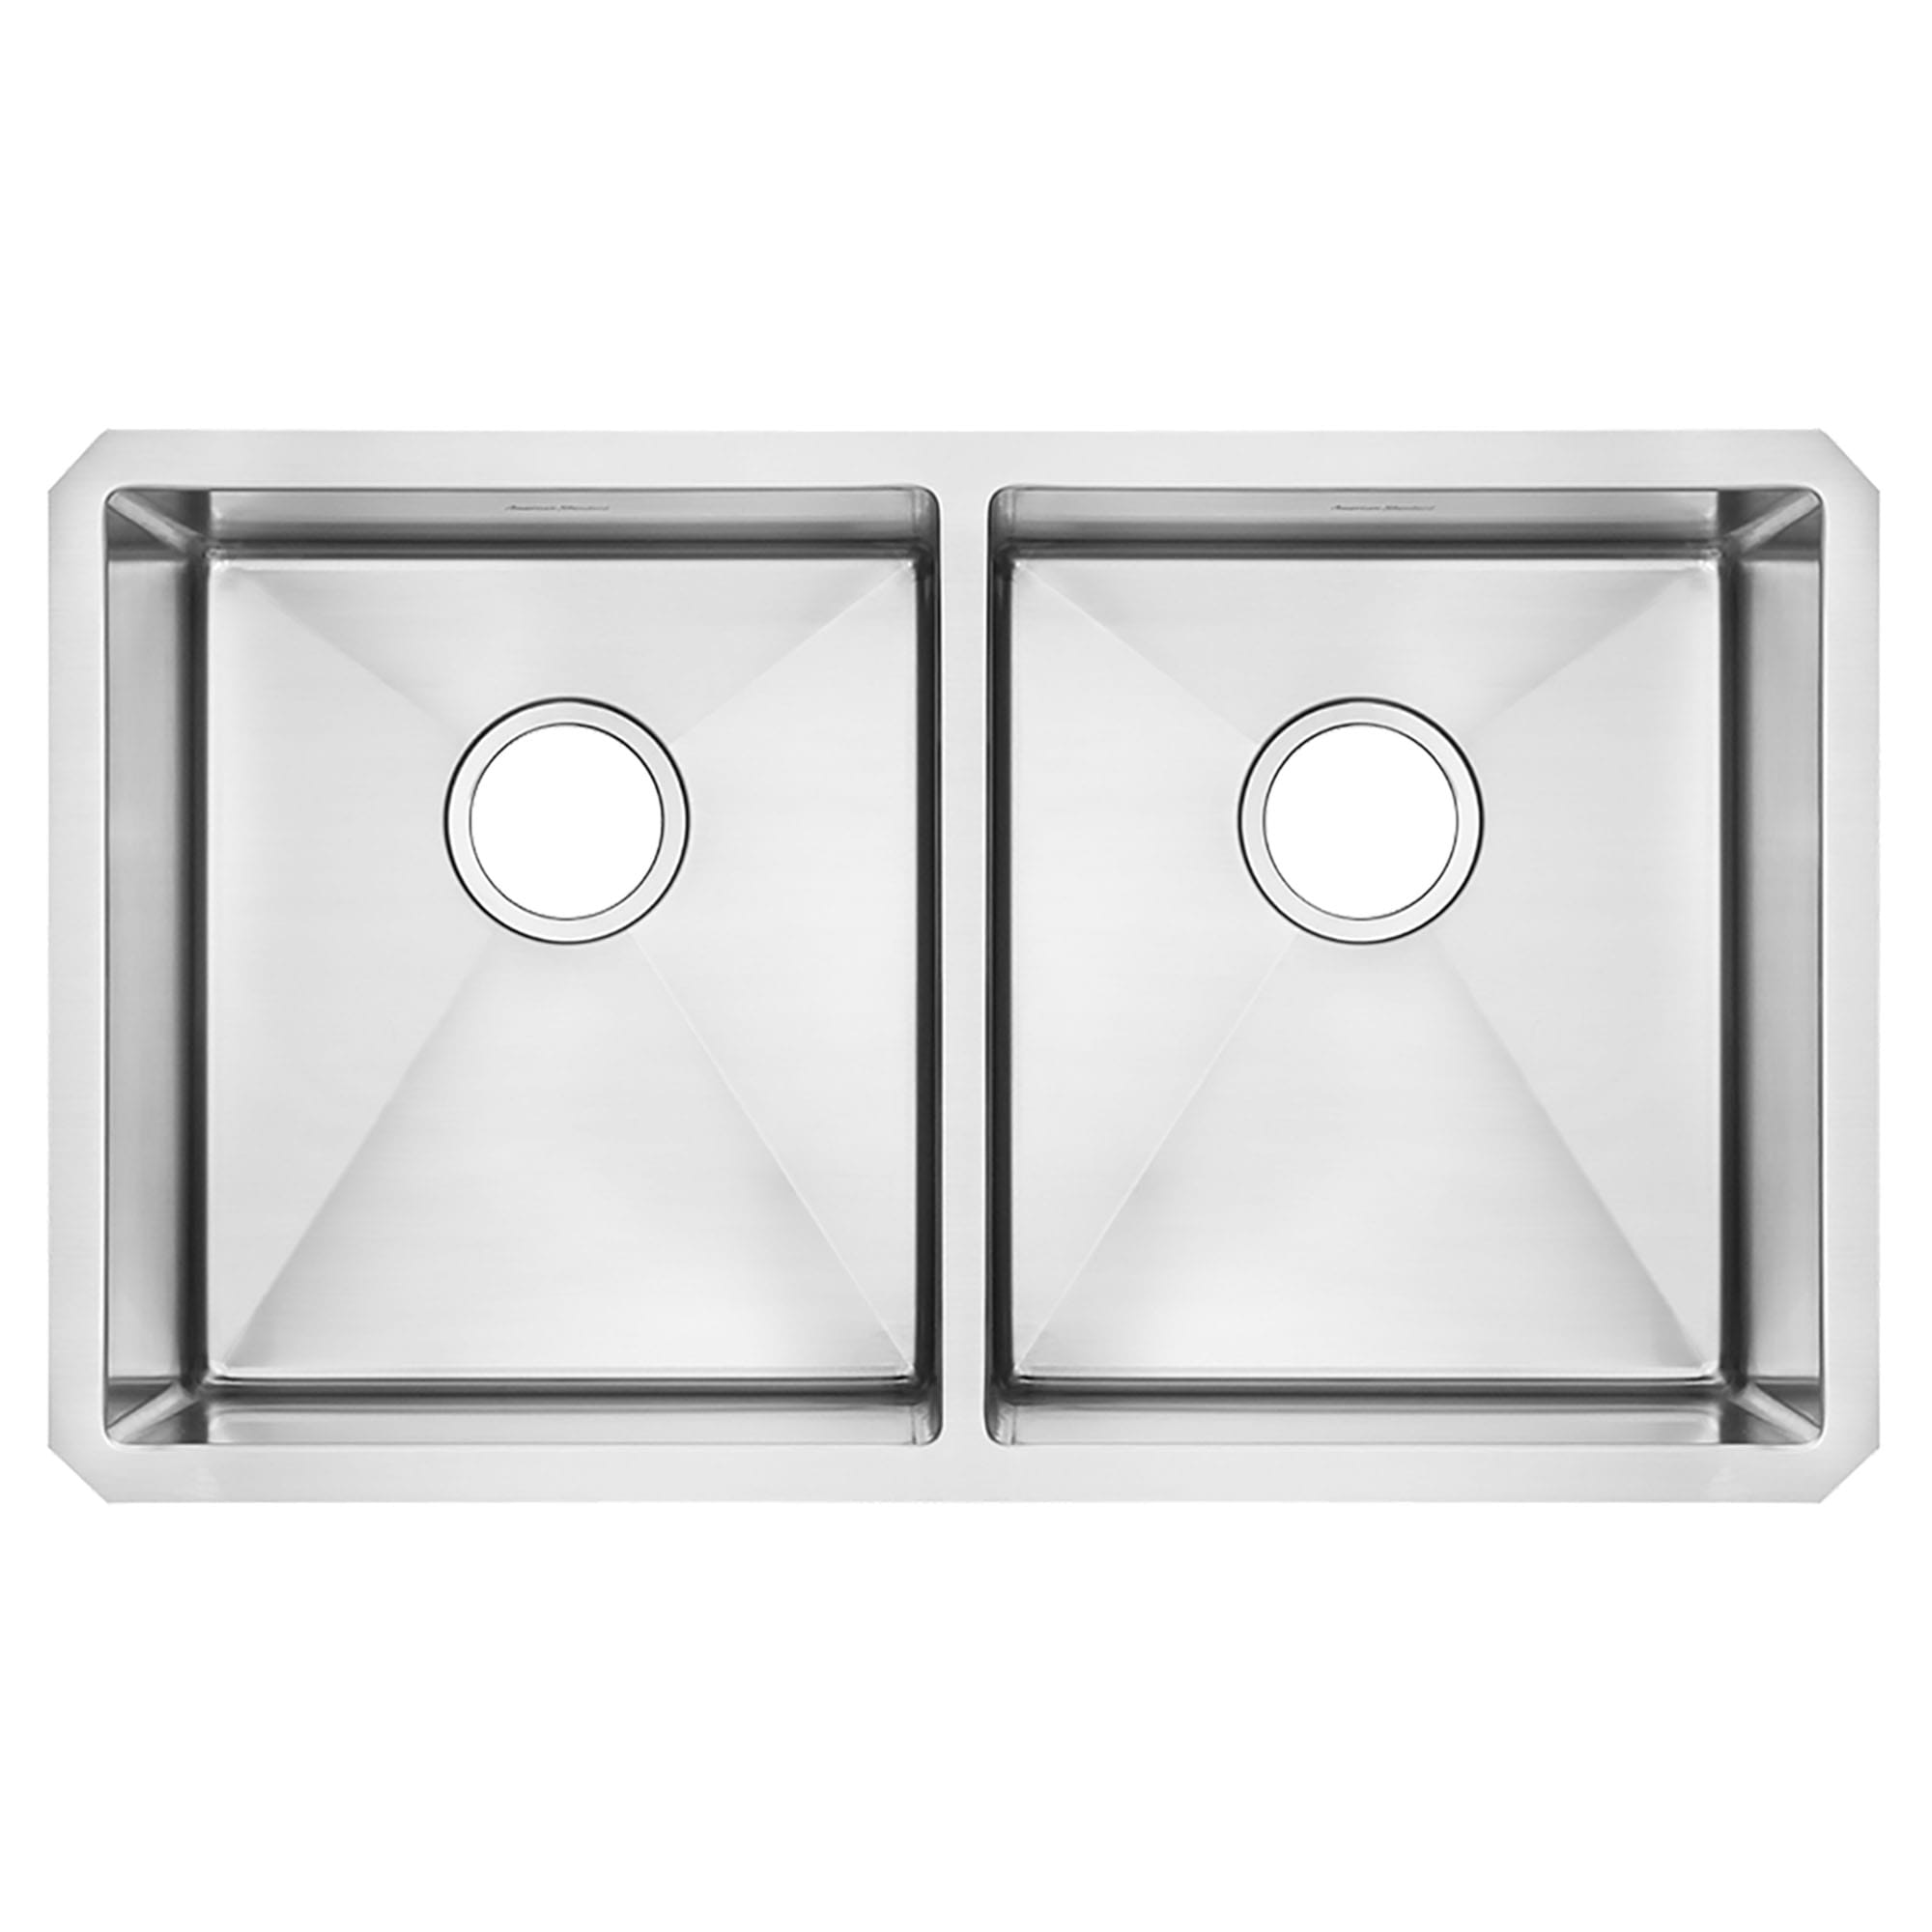 Pekoe 29 x 18-Inch Stainless Steel Undermount Double Bowl Kitchen Sink